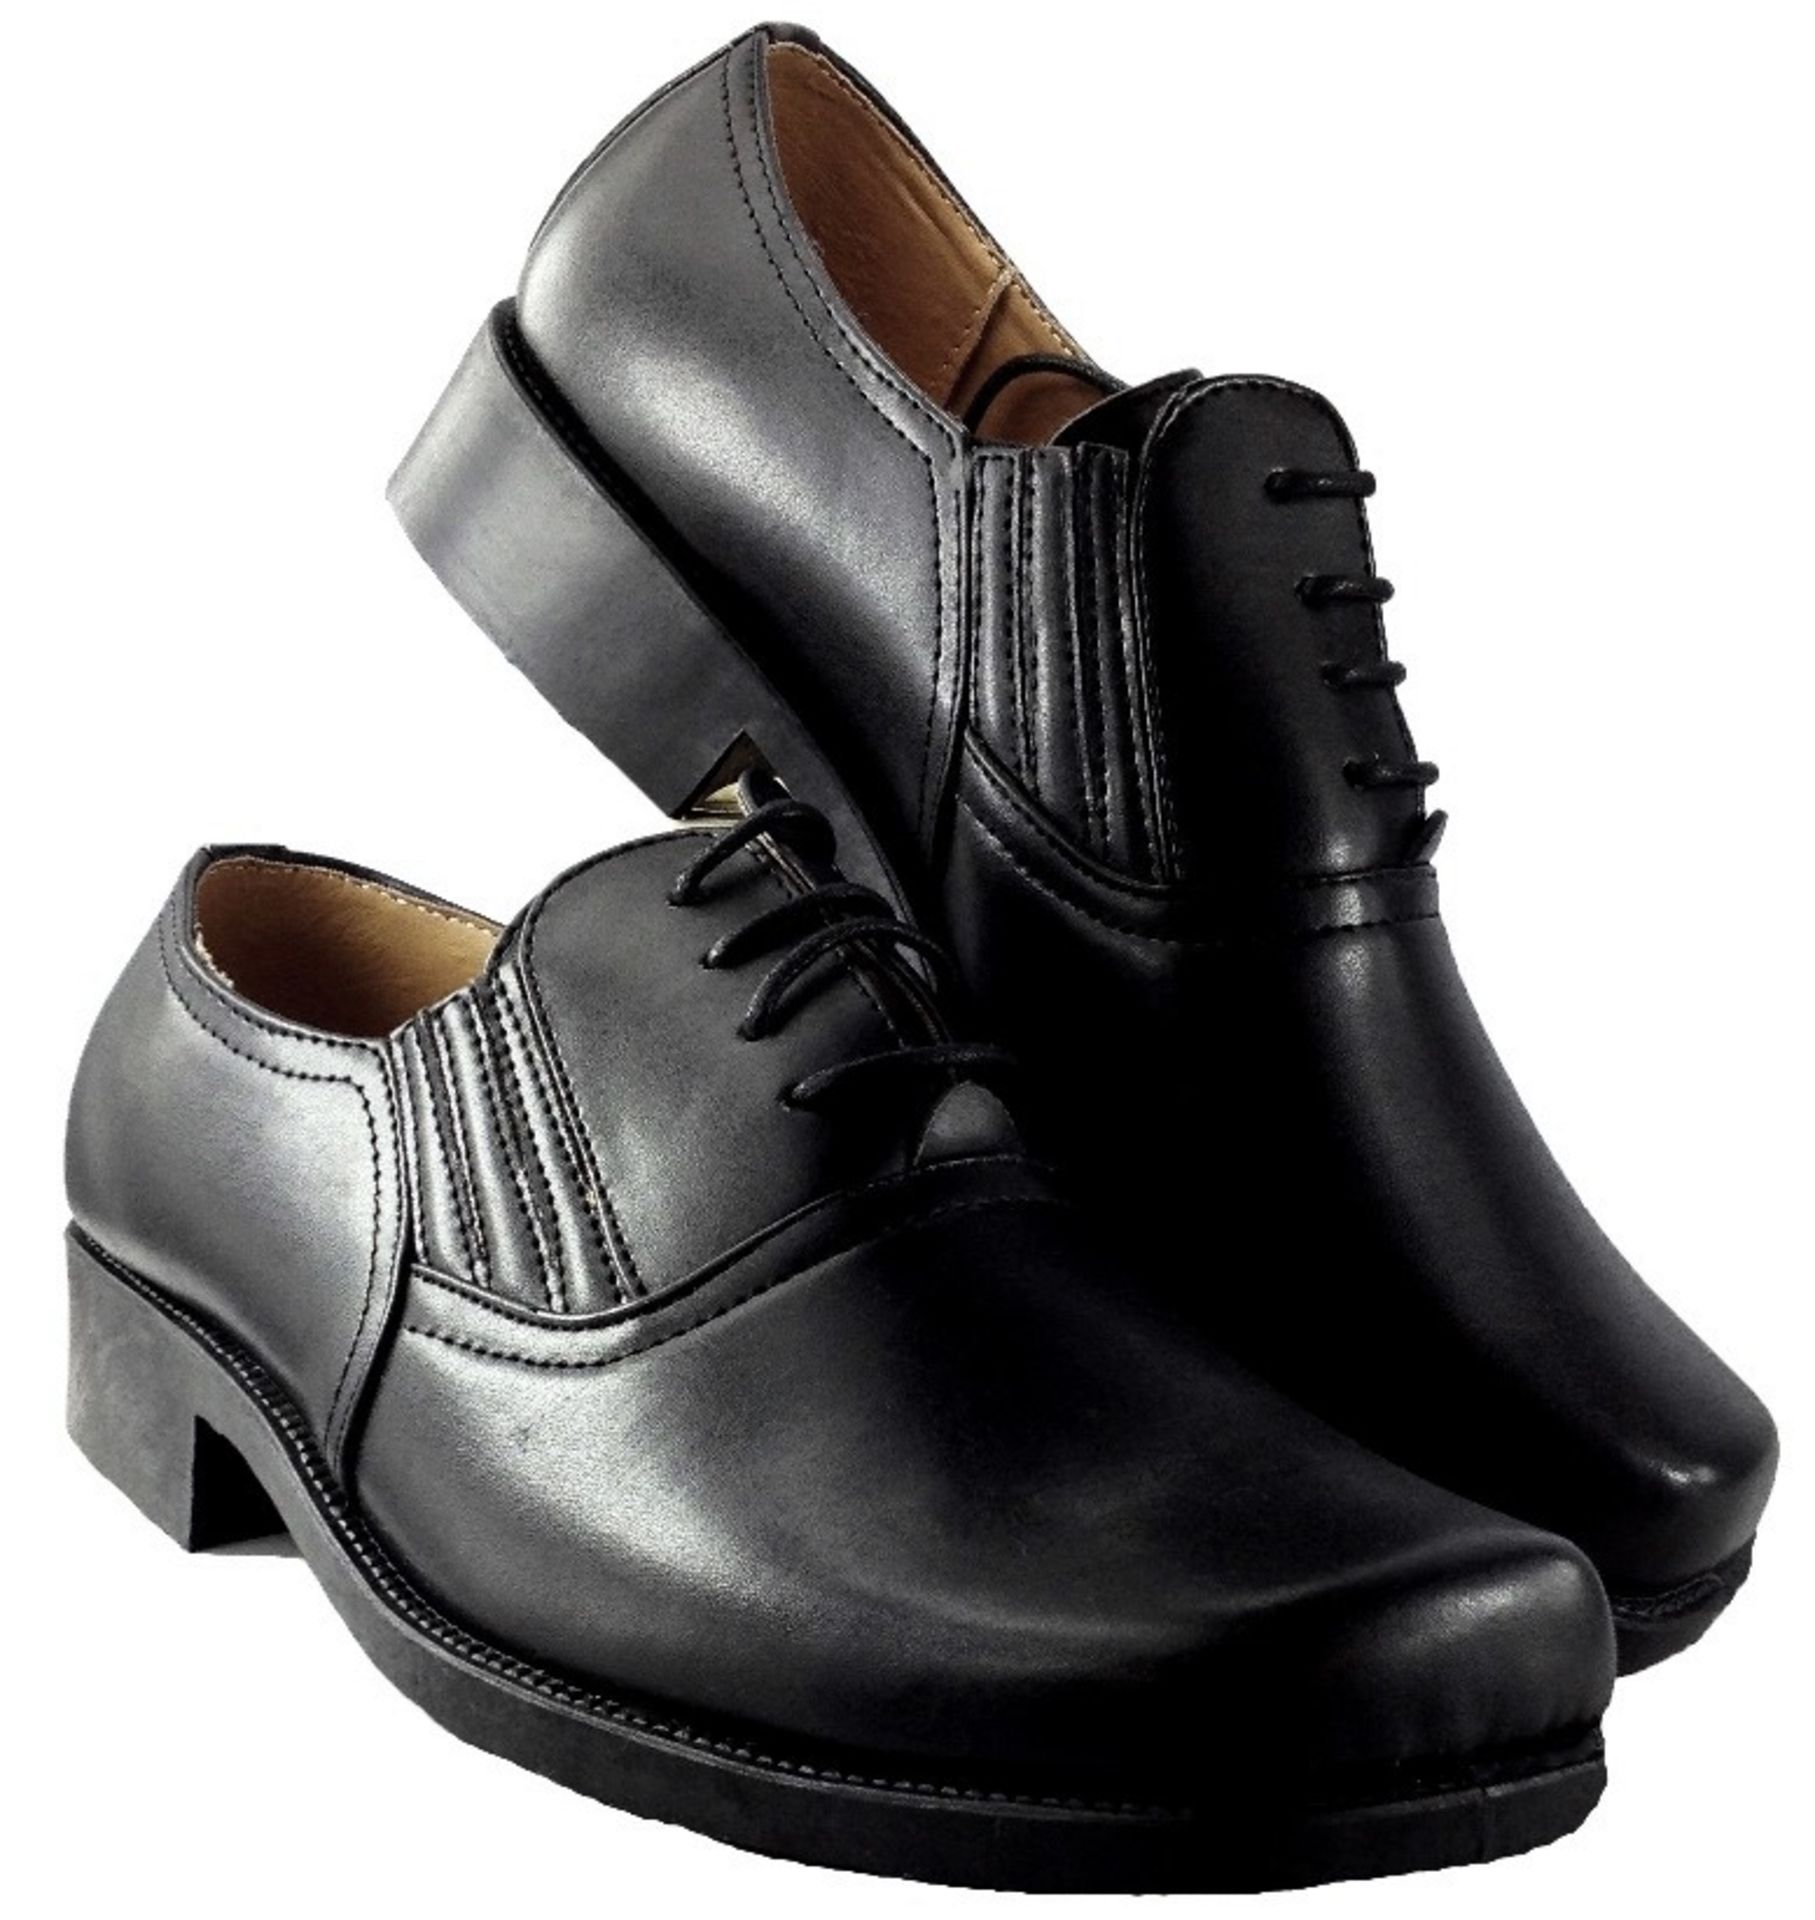 UK 8 Size (EU42) Men's Lace-up Shoes - Smart & Stylish Chisel Toe Design in Matt Black Colour -